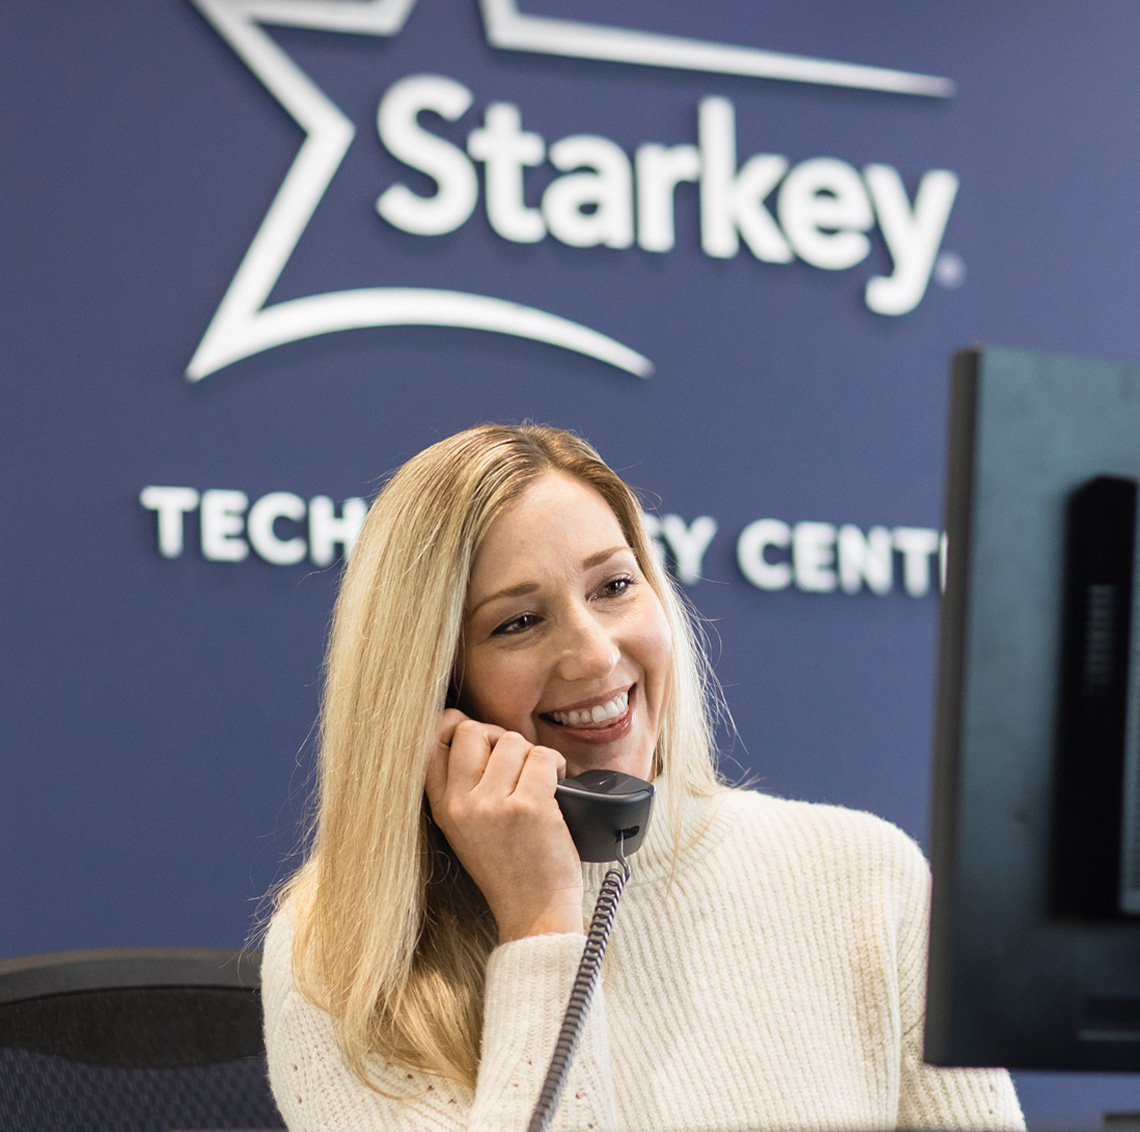 Female Starkey employee answering phone